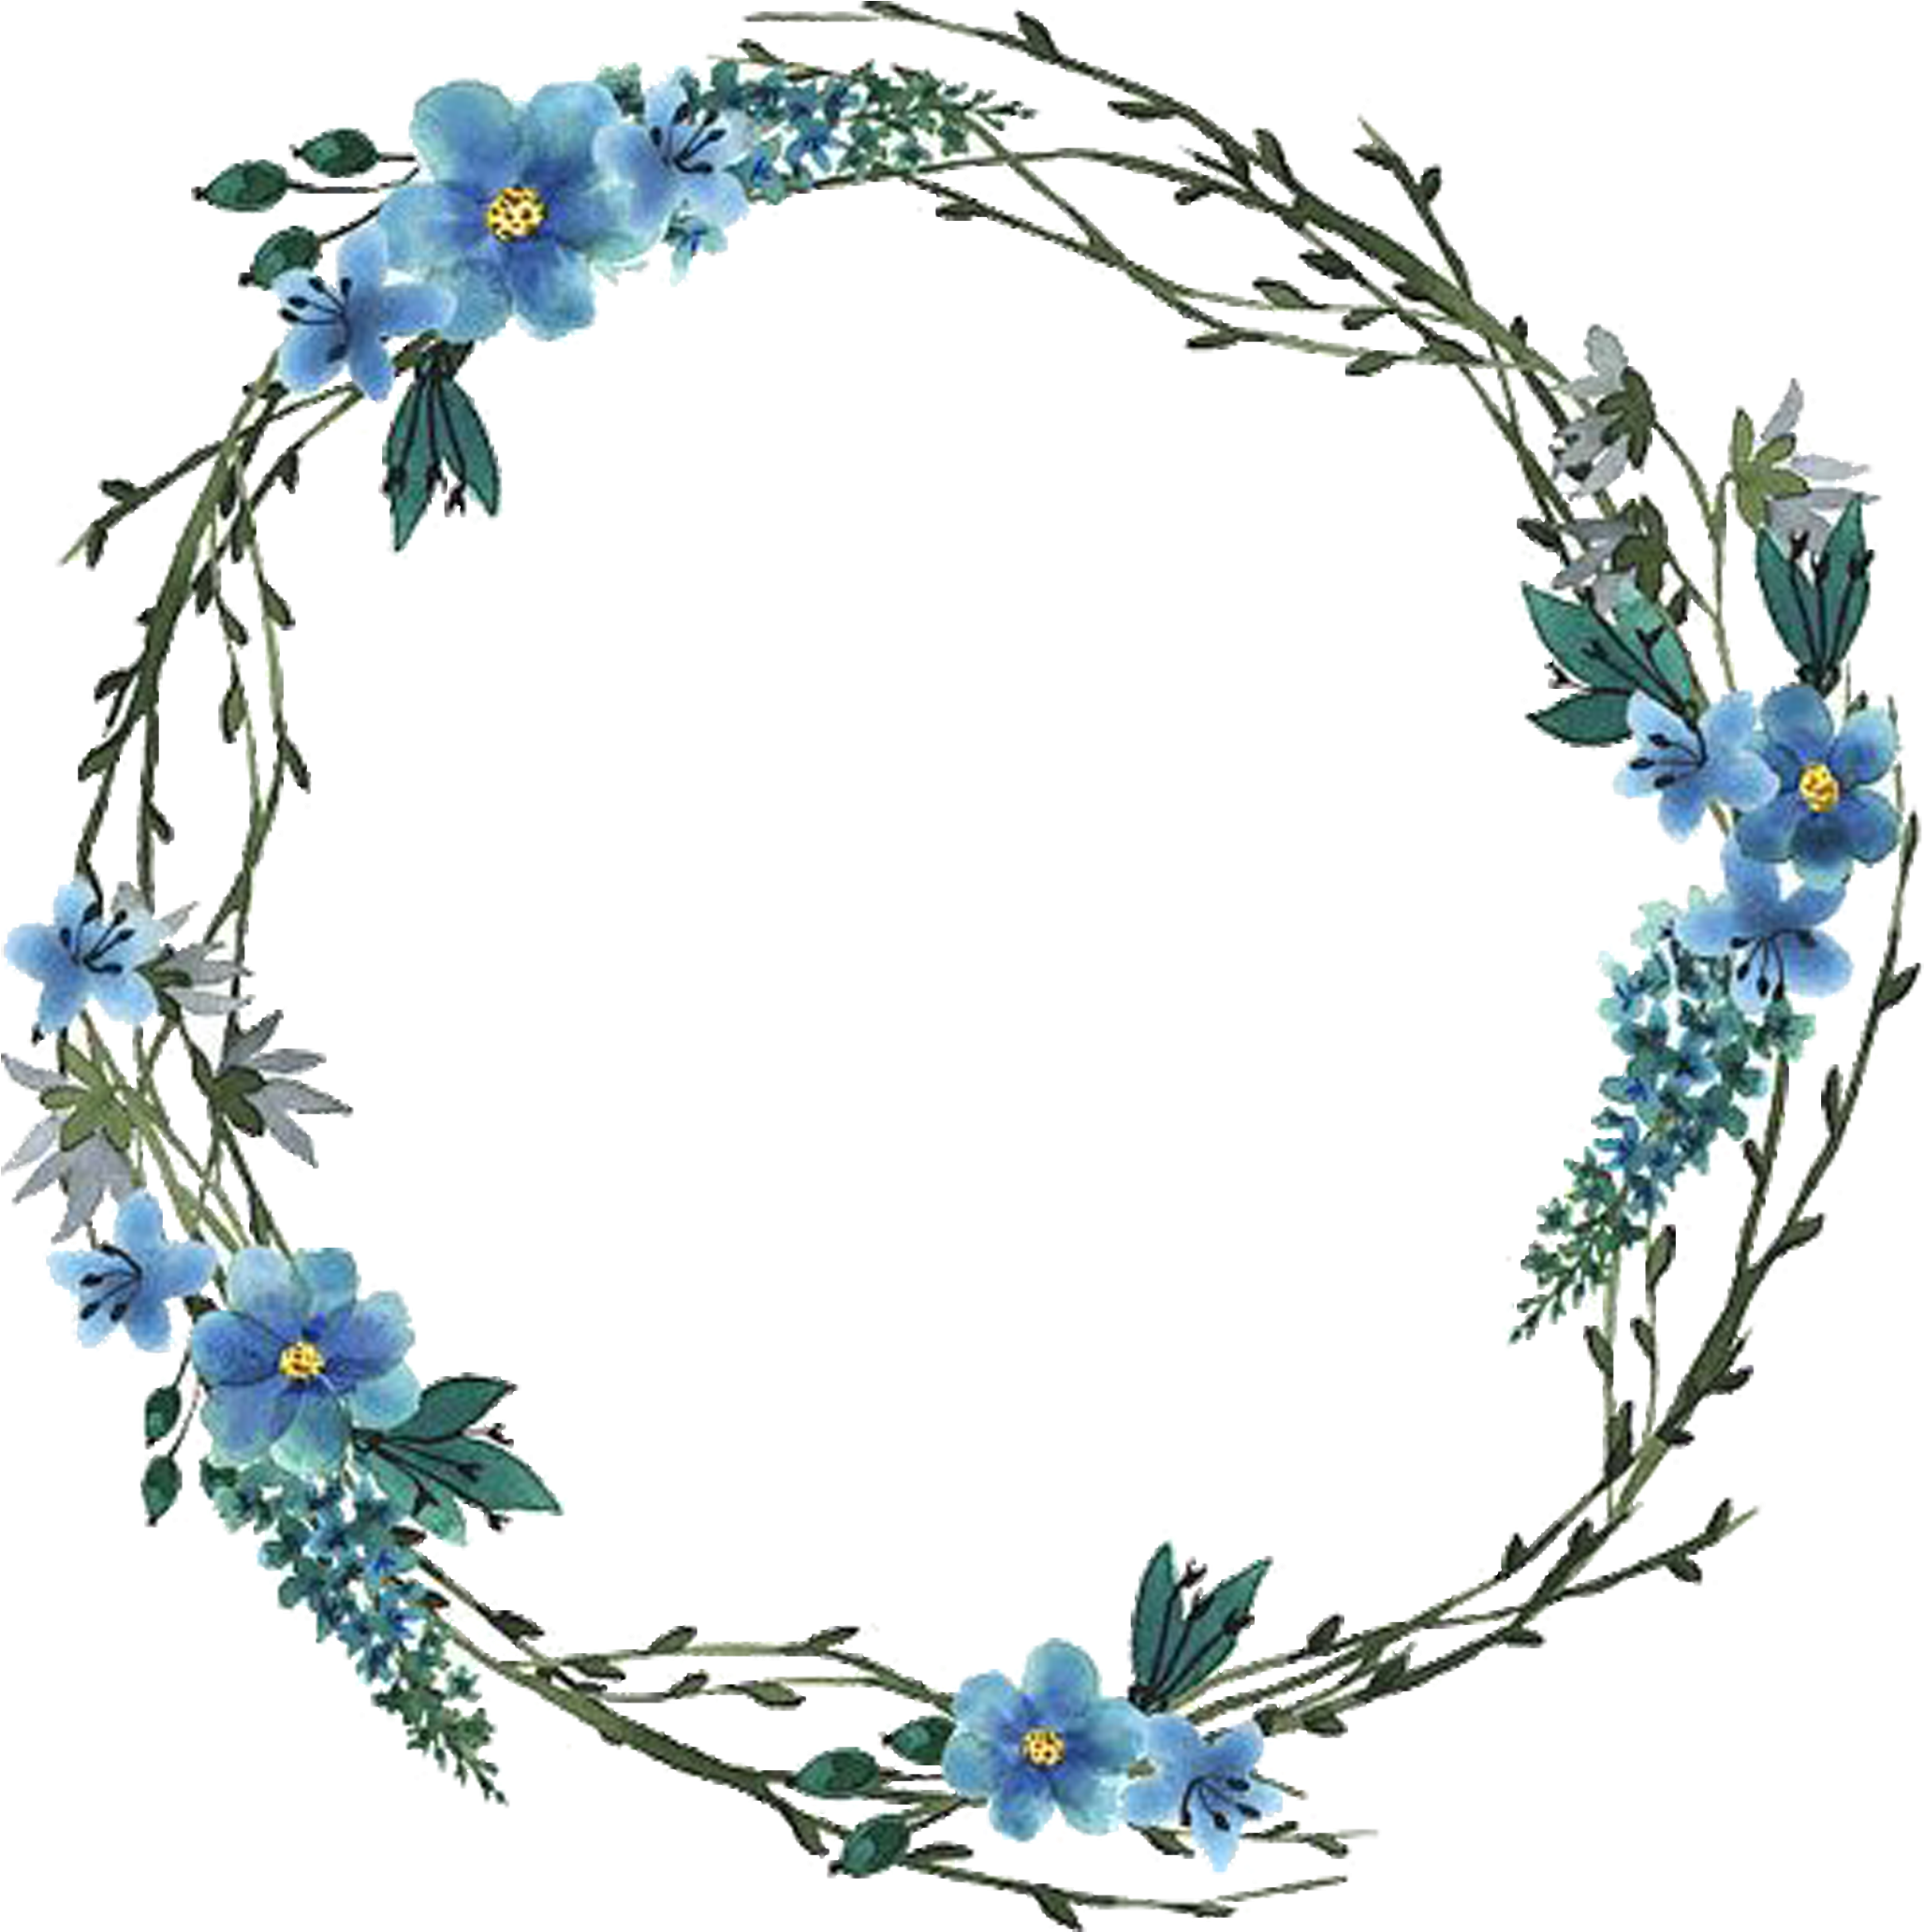 Beautiful Flower Wreath PNG HD Image